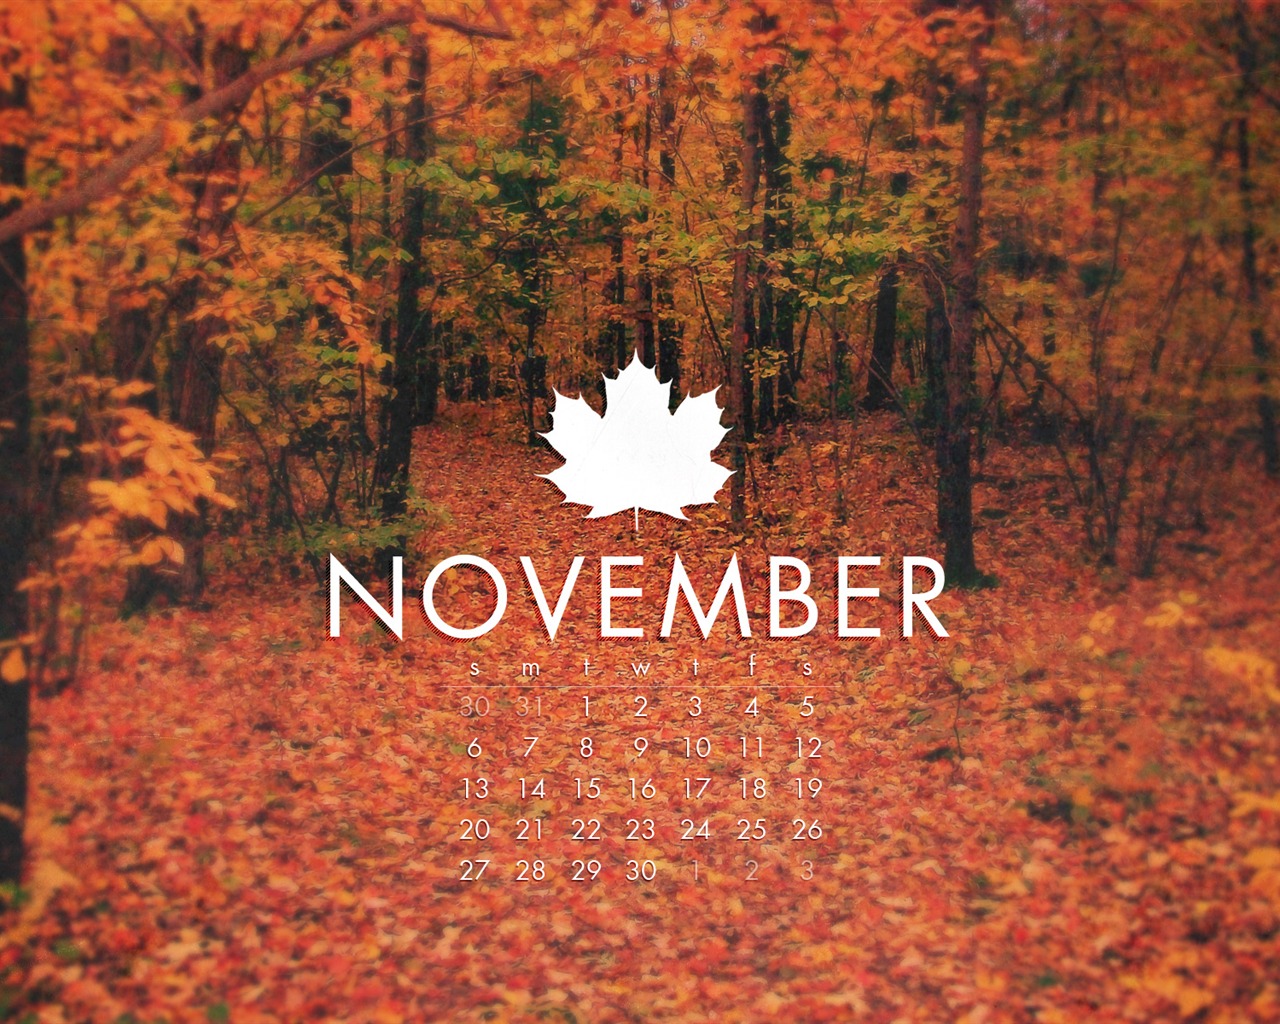 November 2011 Calendar wallpaper (2) #11 - 1280x1024